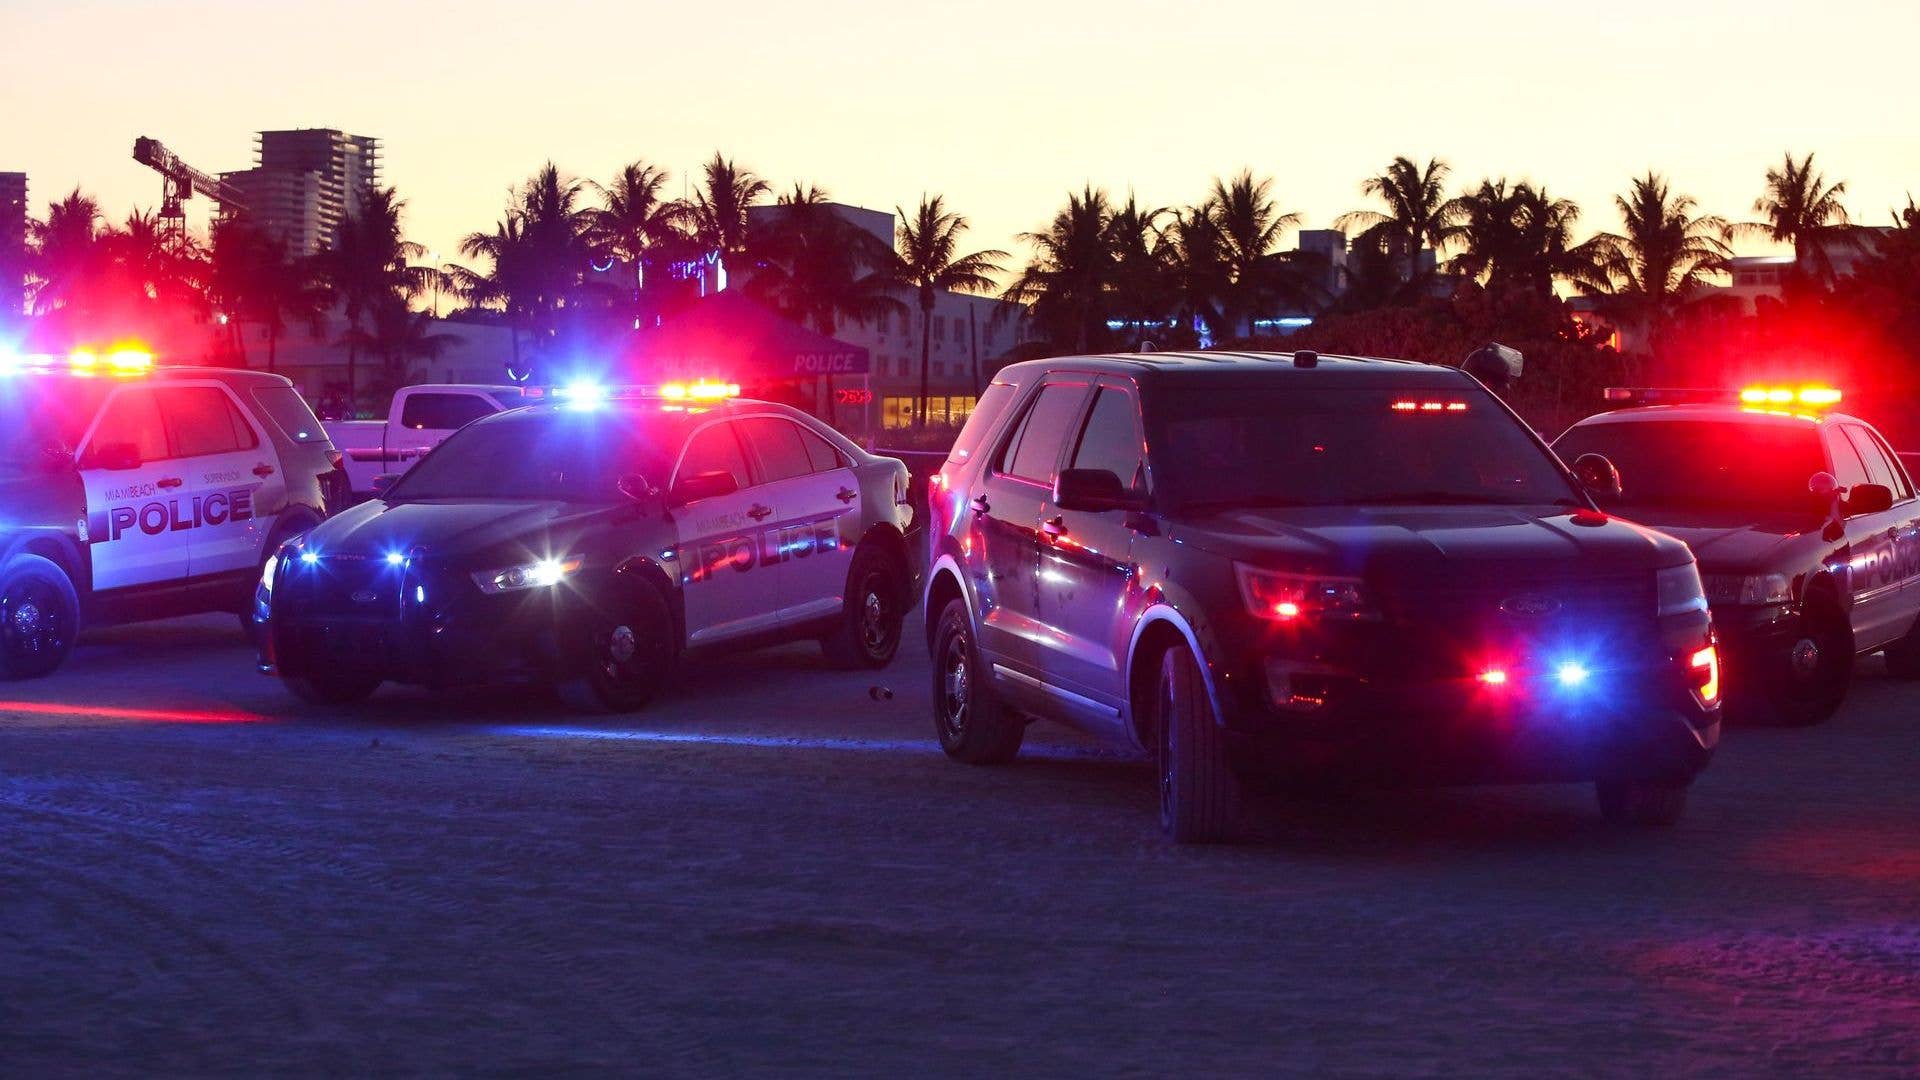 Miami police